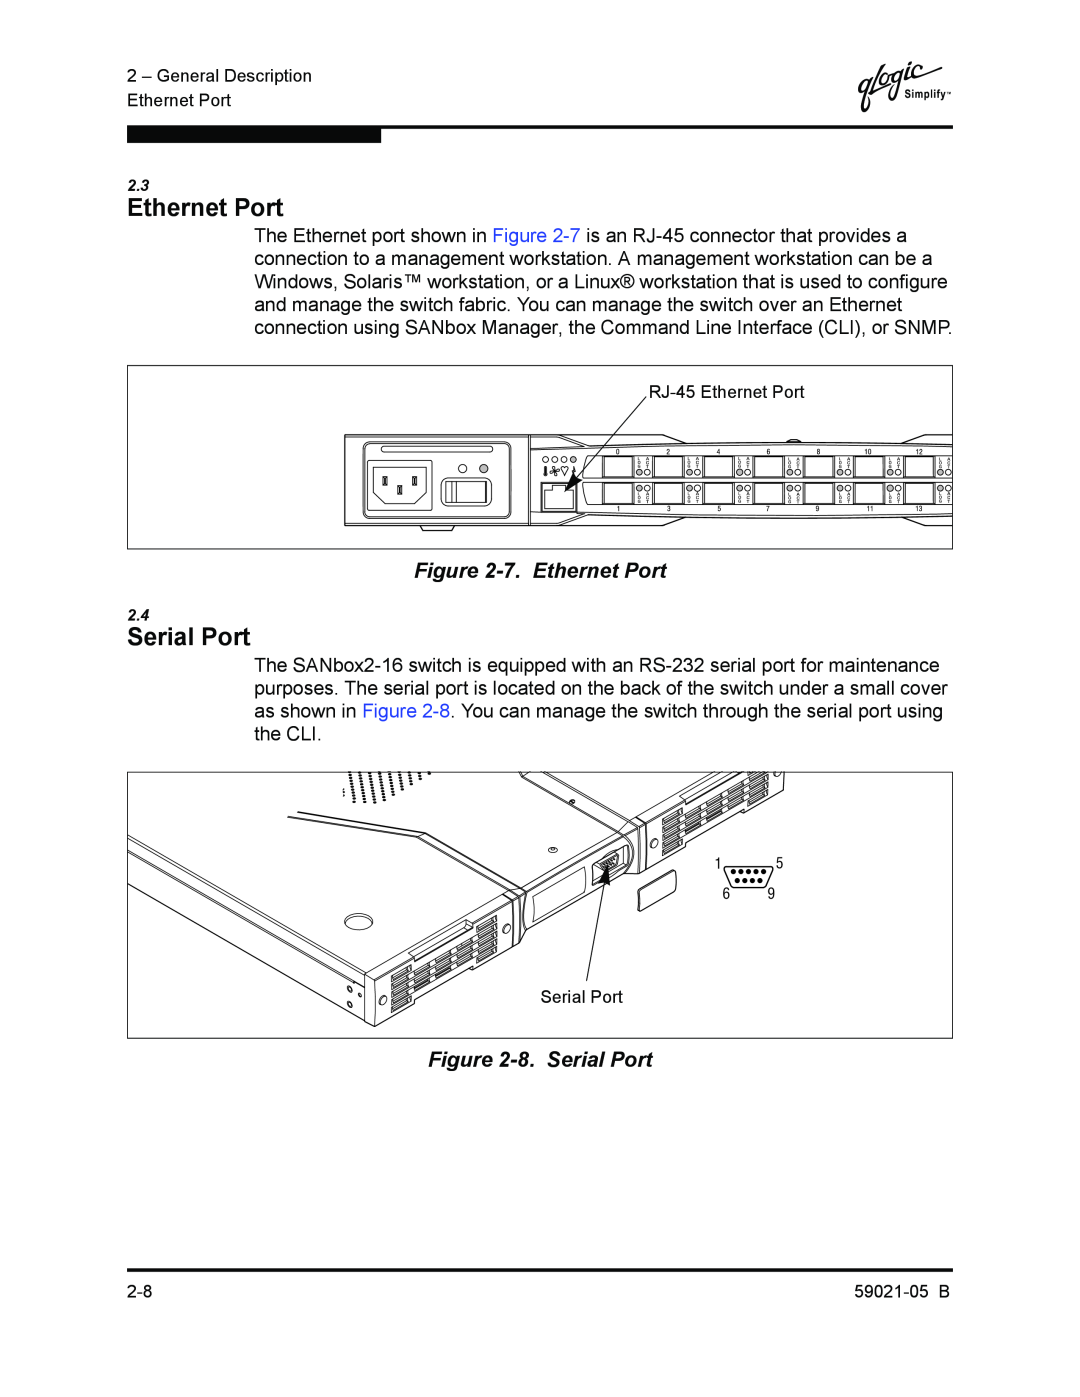 Q-Logic 59021-05 B manual 7. Ethernet Port, 8. Serial Port 